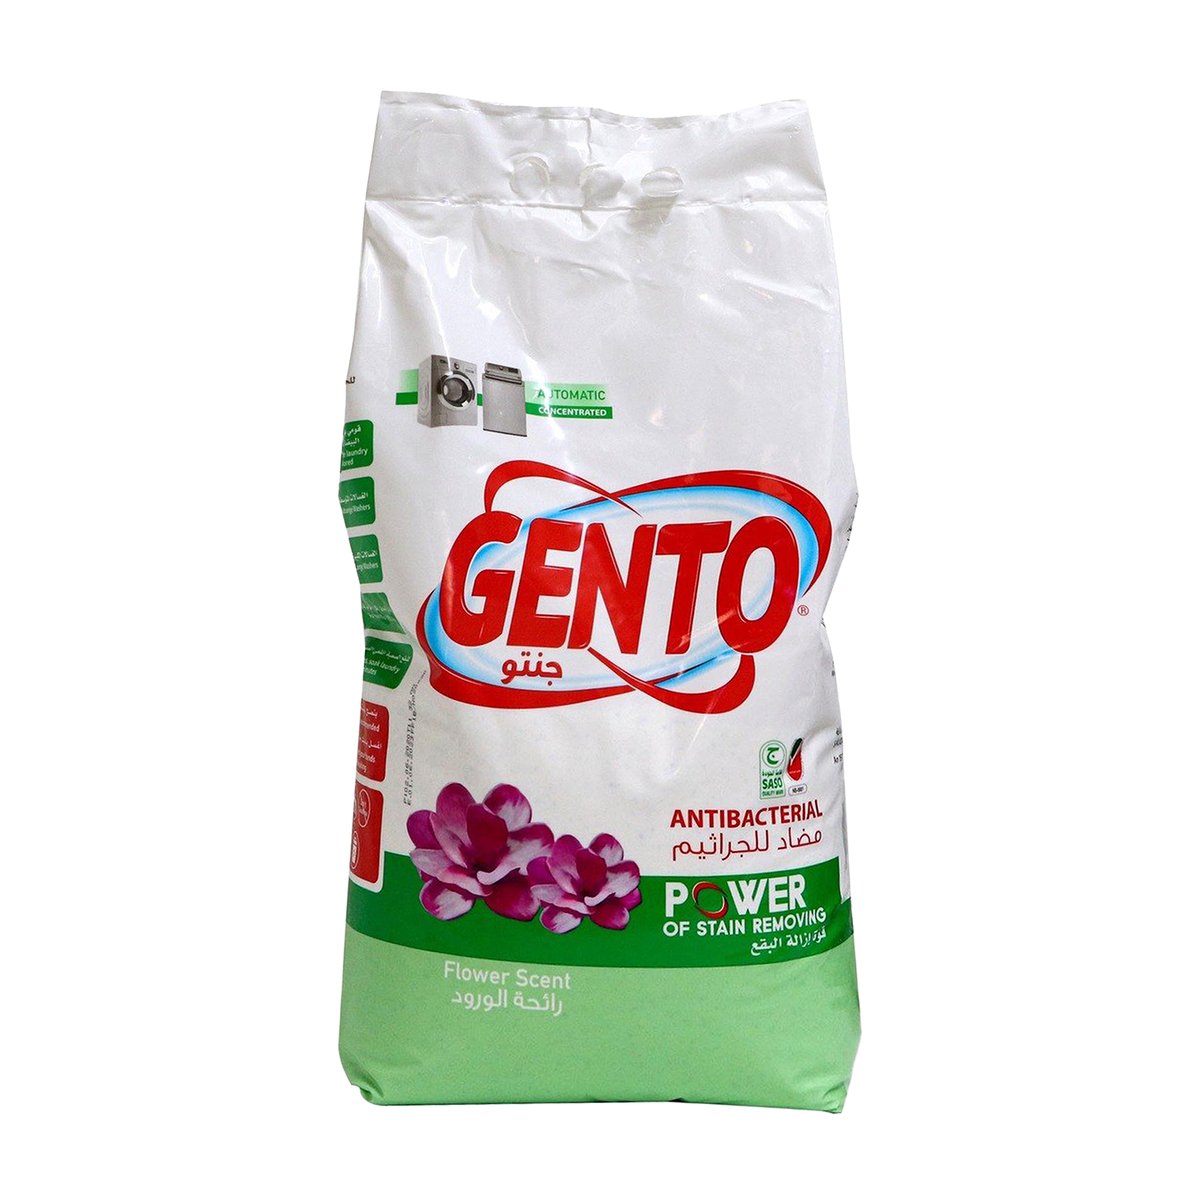 Gento Automatic Washing Powder Flower Scent 4.5 kg